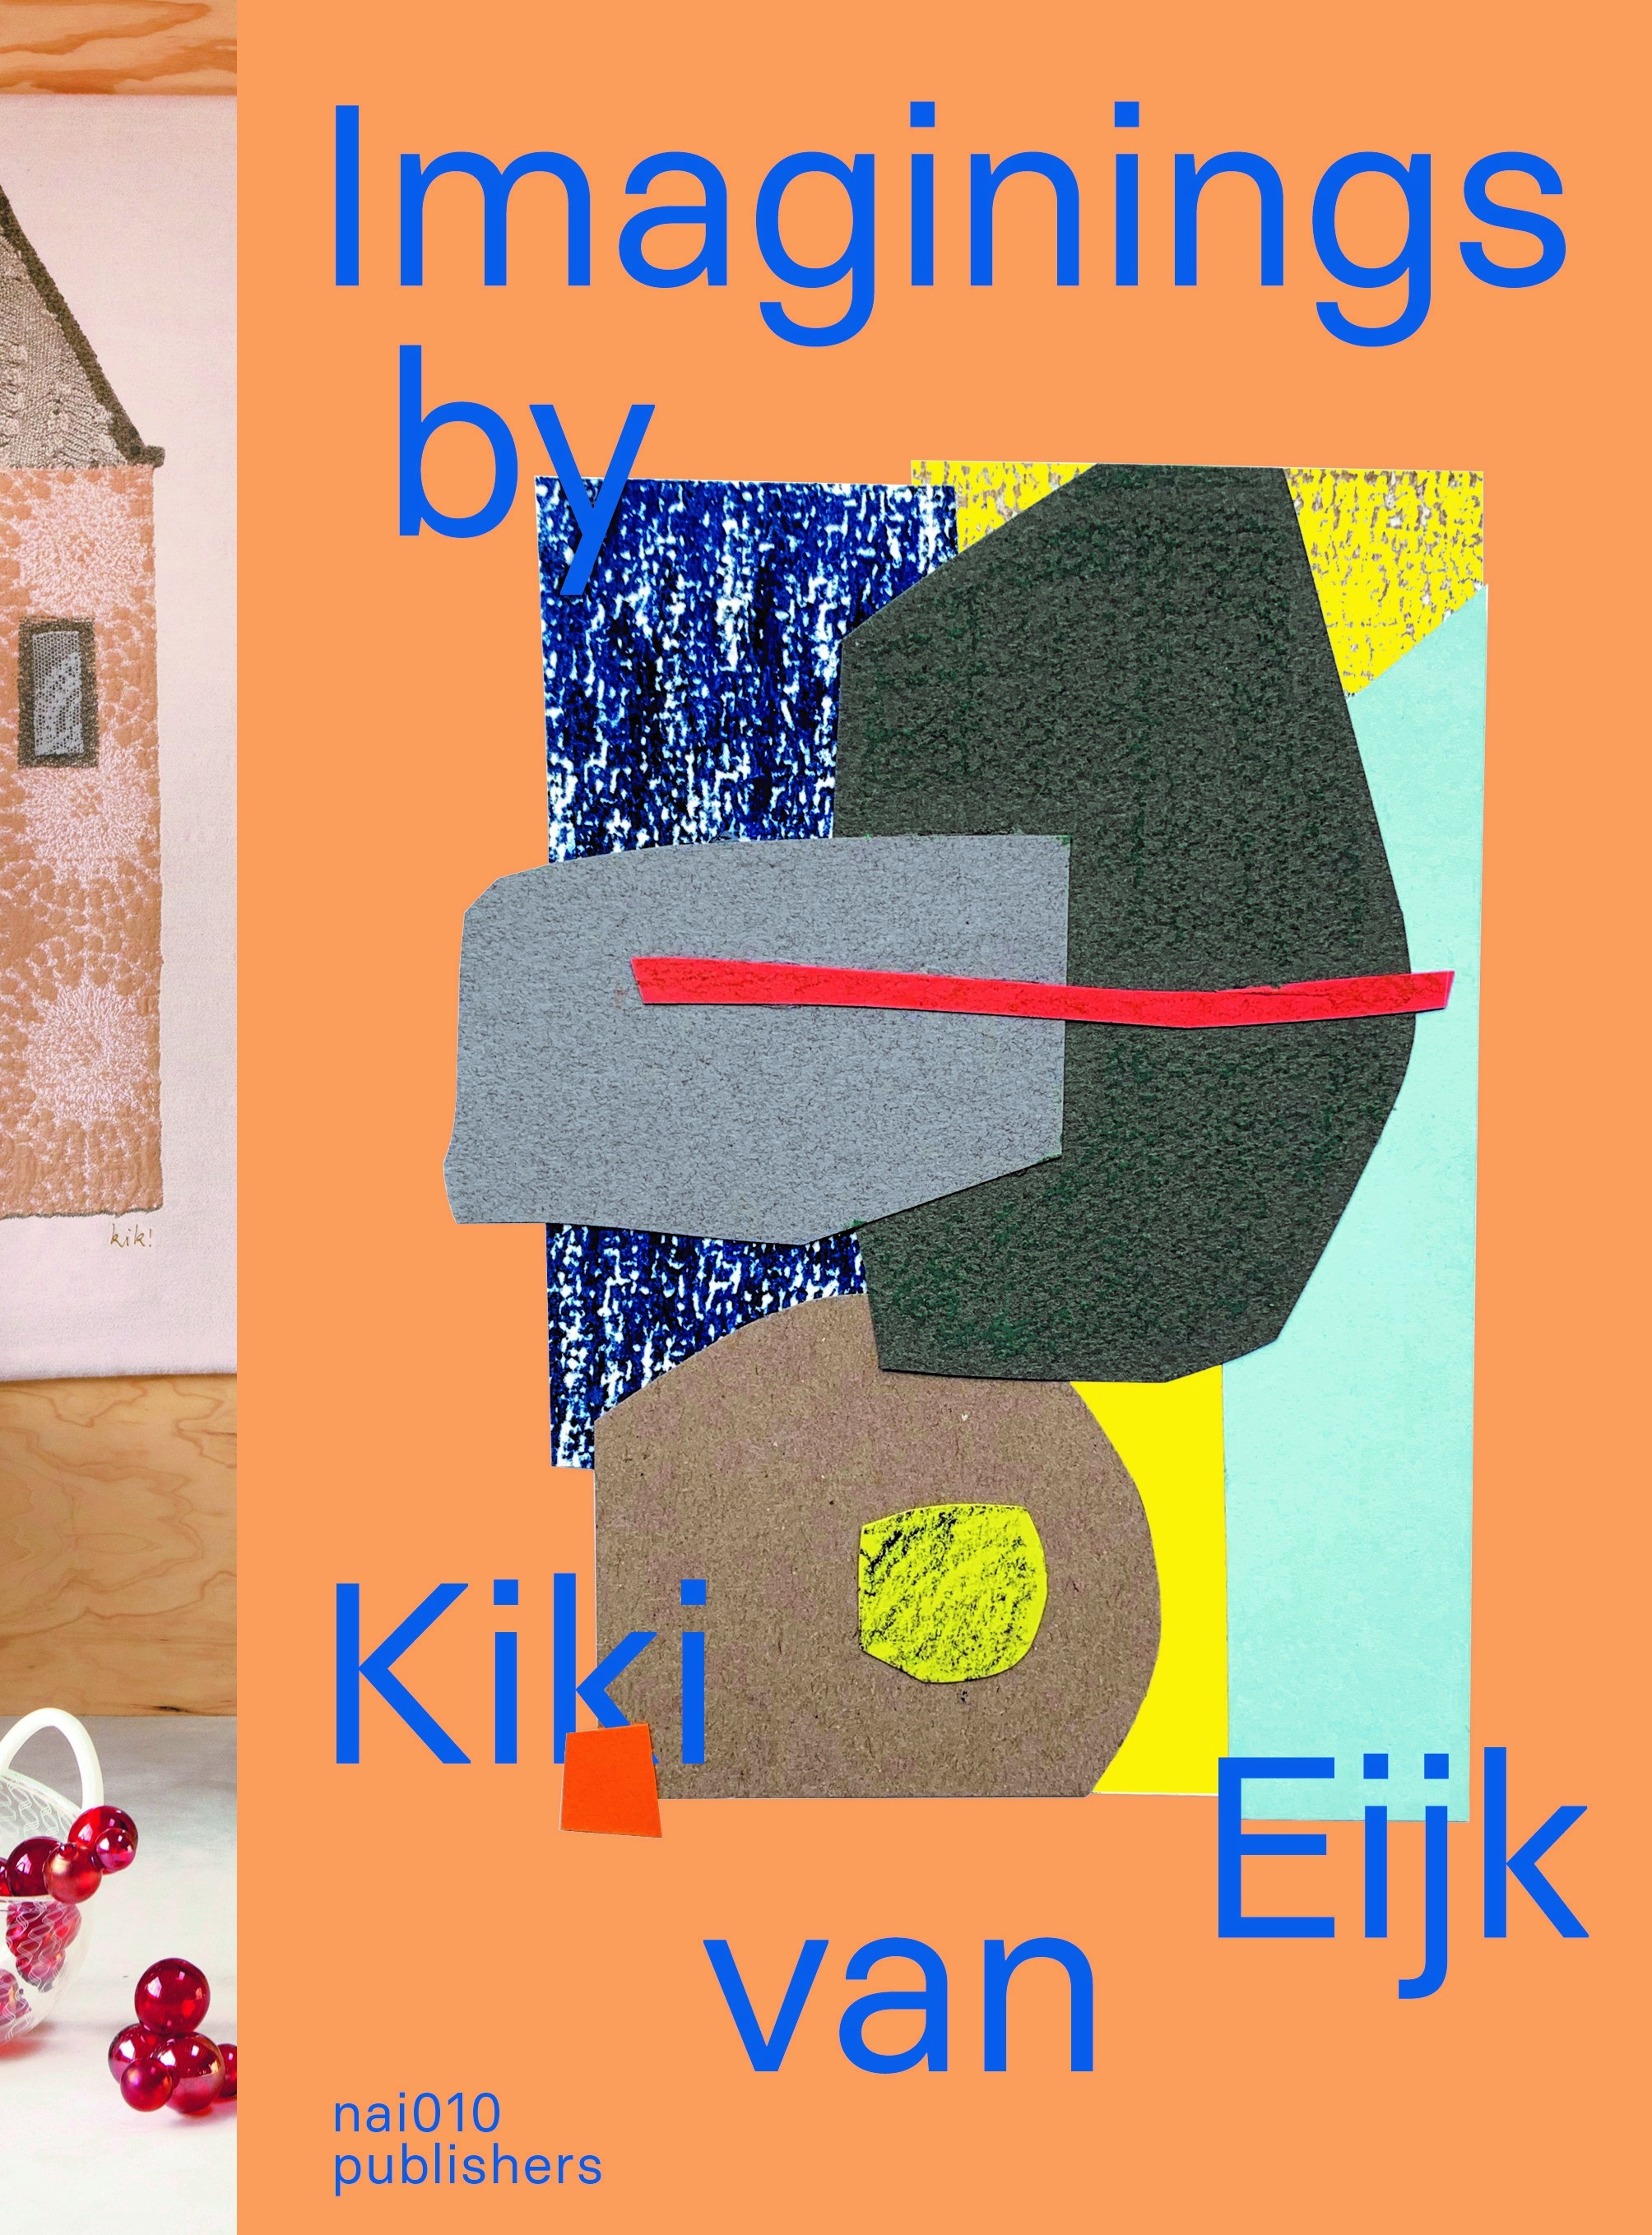 Imaginings by Kiki van Eijk